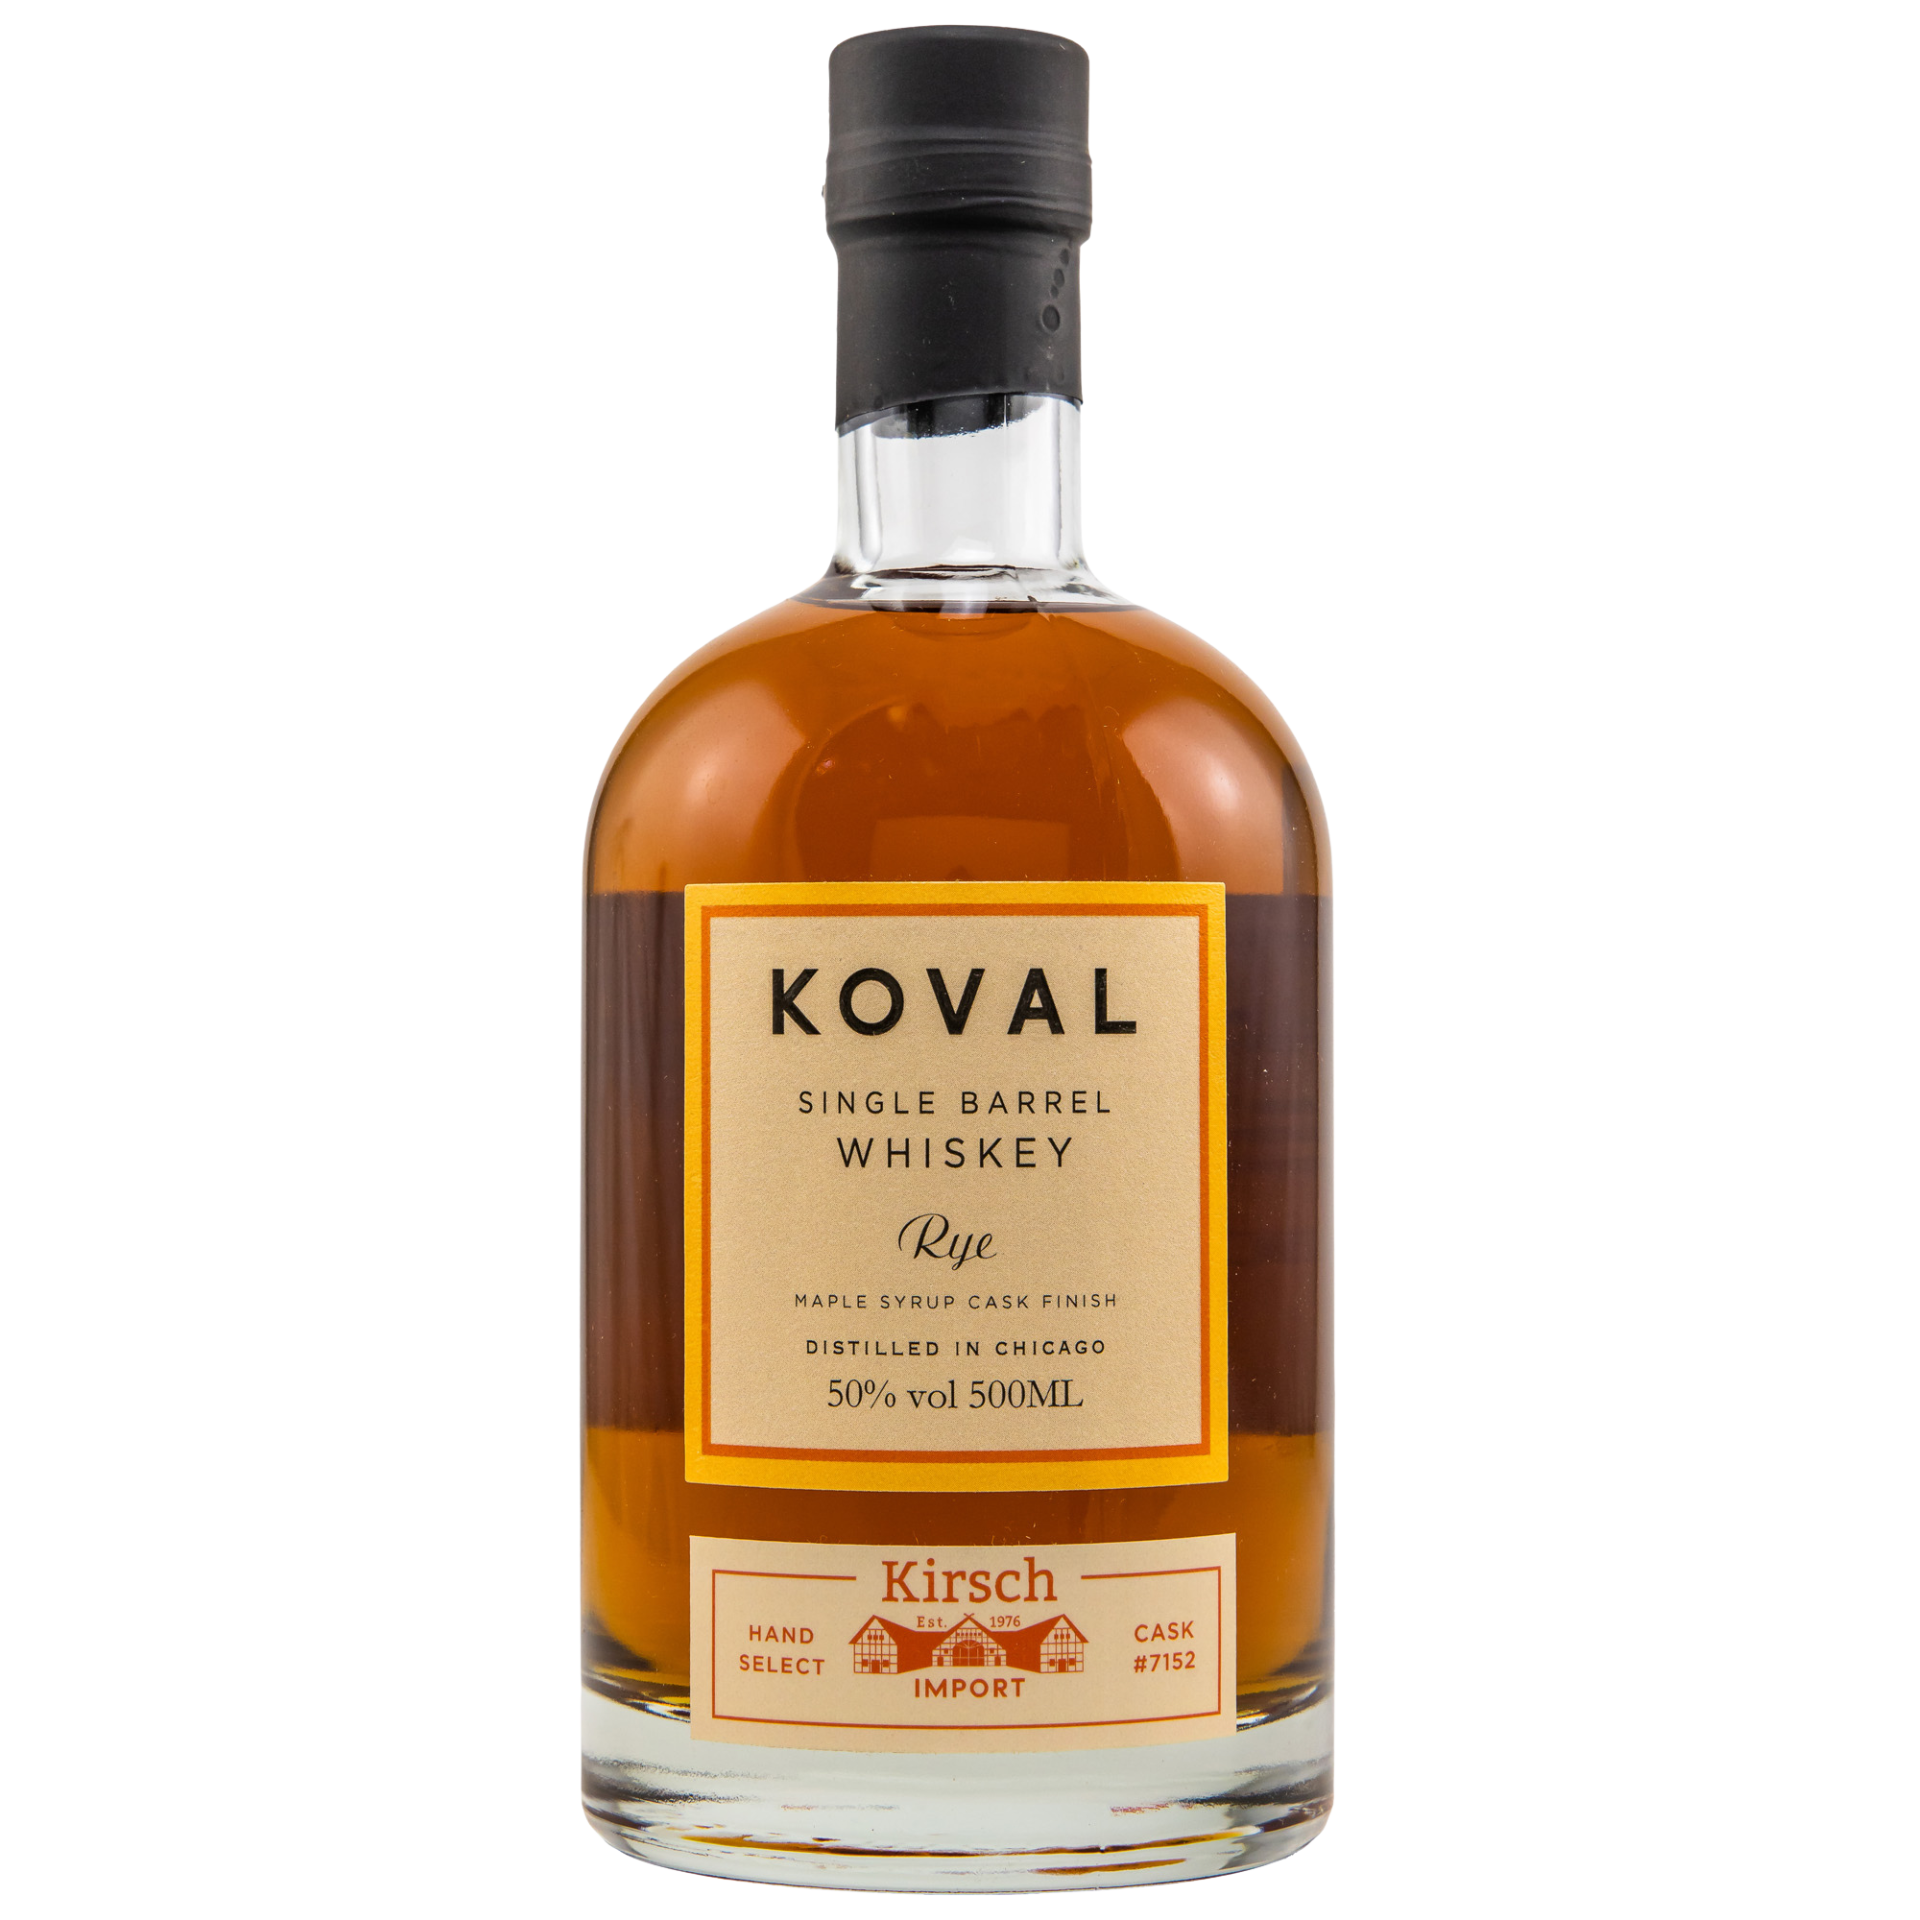 Koval Rye Maple Syrup Cask Finish Whiskey #7152 50% 0,5l